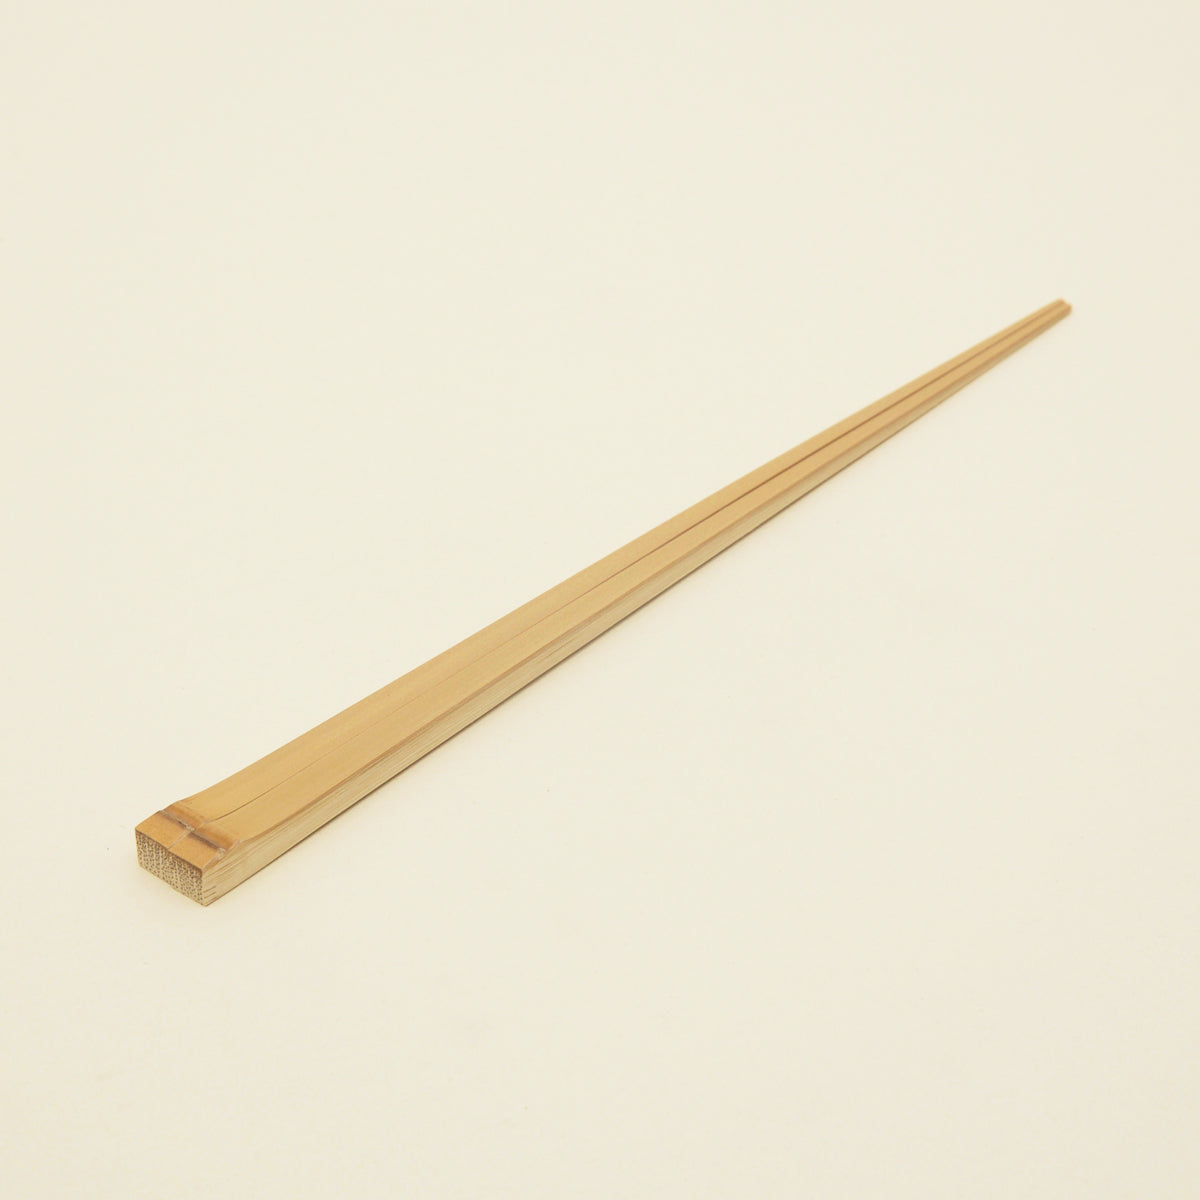 Bamboo Chopsticks with Knob